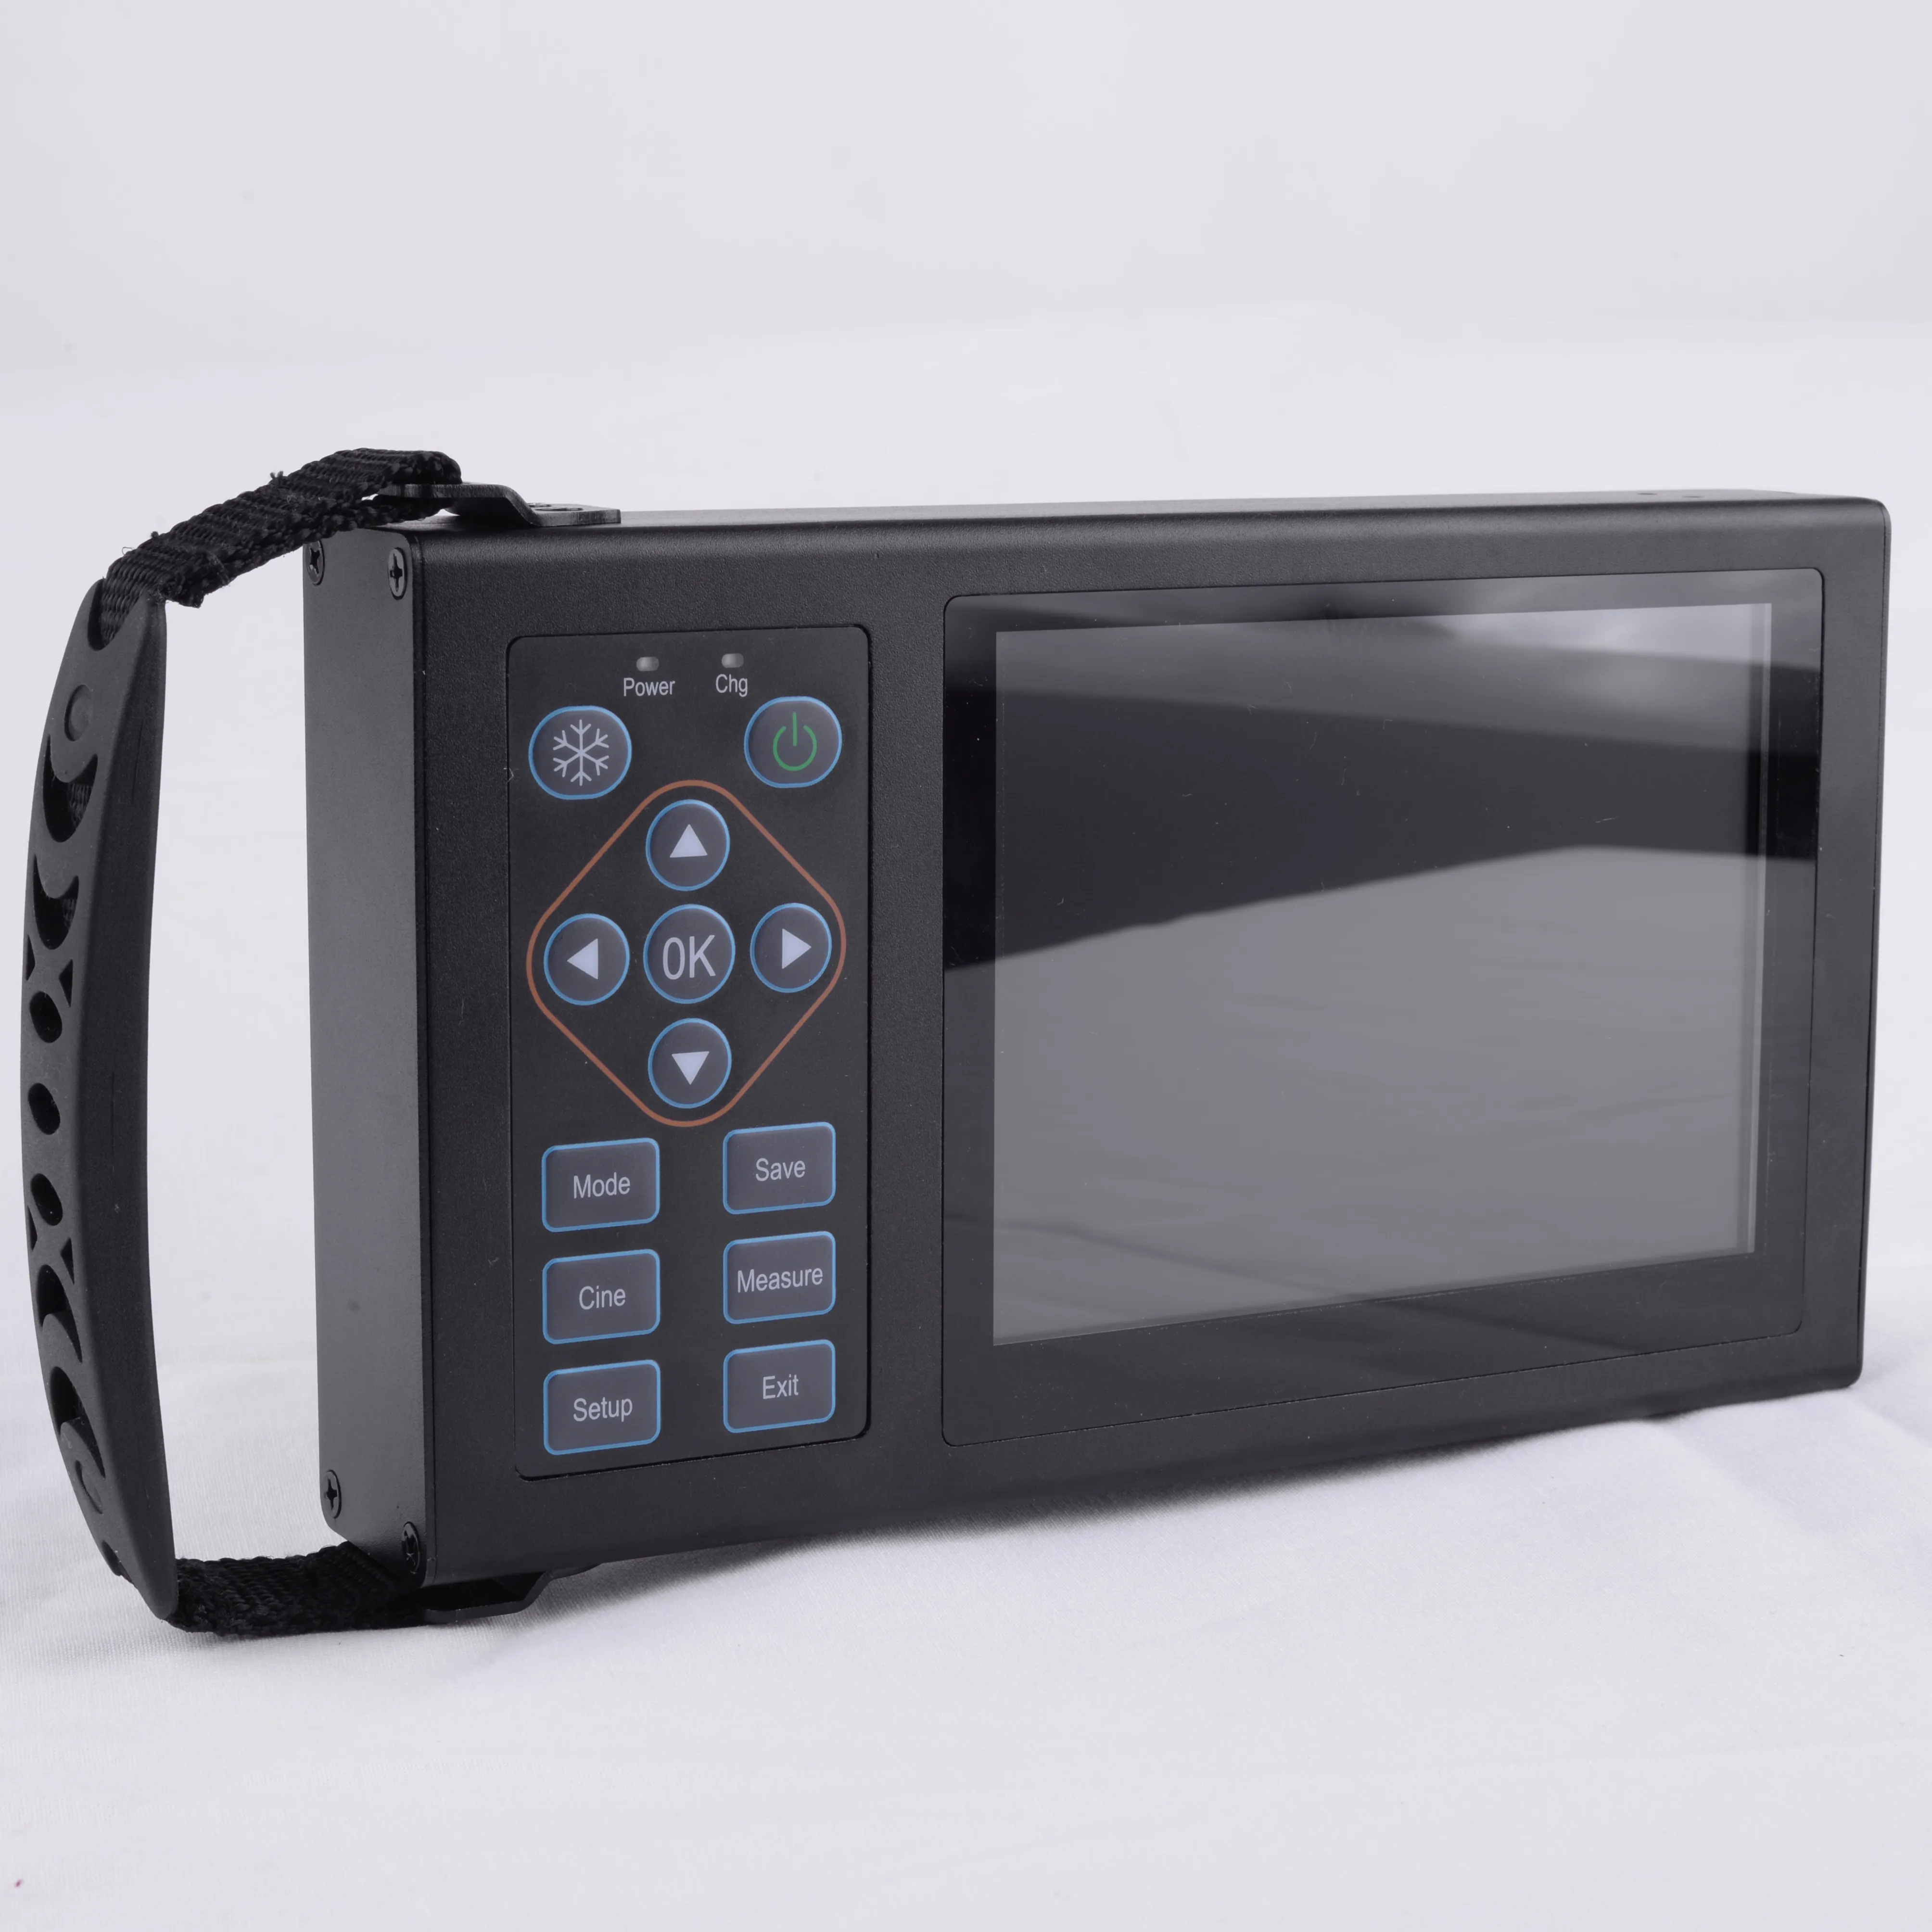 A10 डिजिटल सबसे अच्छी कीमत पशु चिकित्सा पोर्टेबल अल्ट्रासाउंड 5.6LED स्क्रीन स्कैनर अन्य पशु चिकित्सा साधन चिकित्सा उपकरण पशु